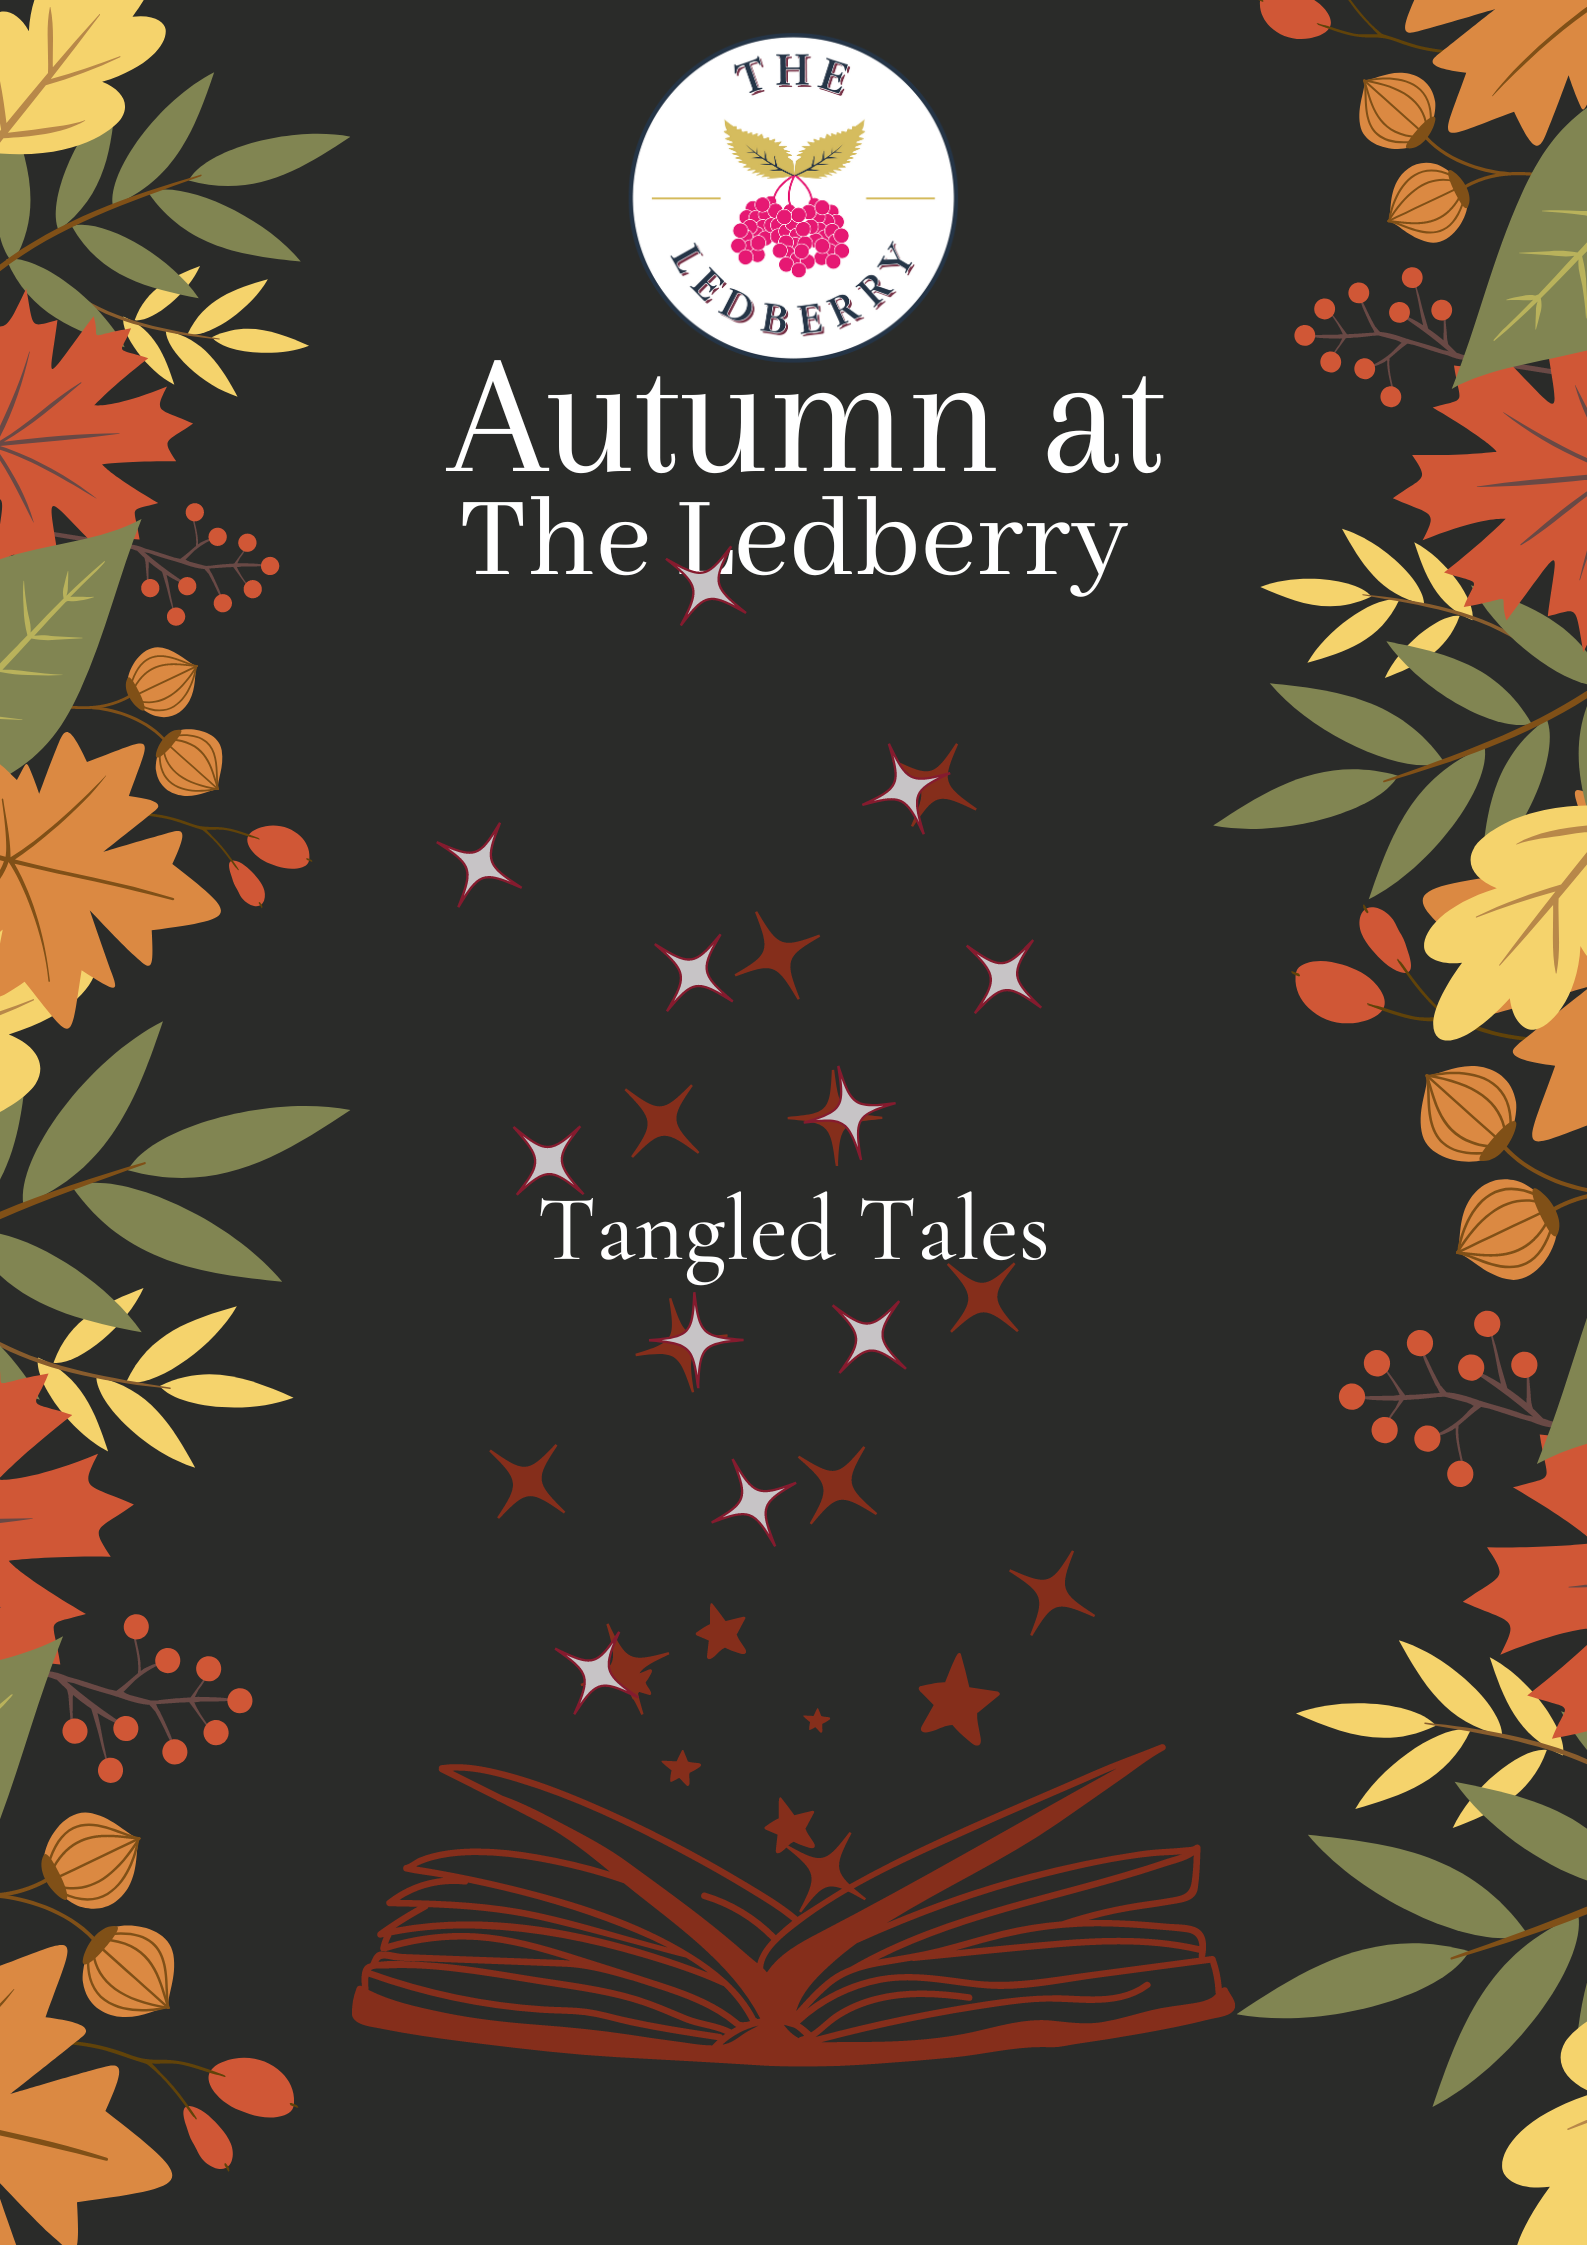 Tangled Tales: Seasonal Story Telling & Lino Printing - Monday 18th December